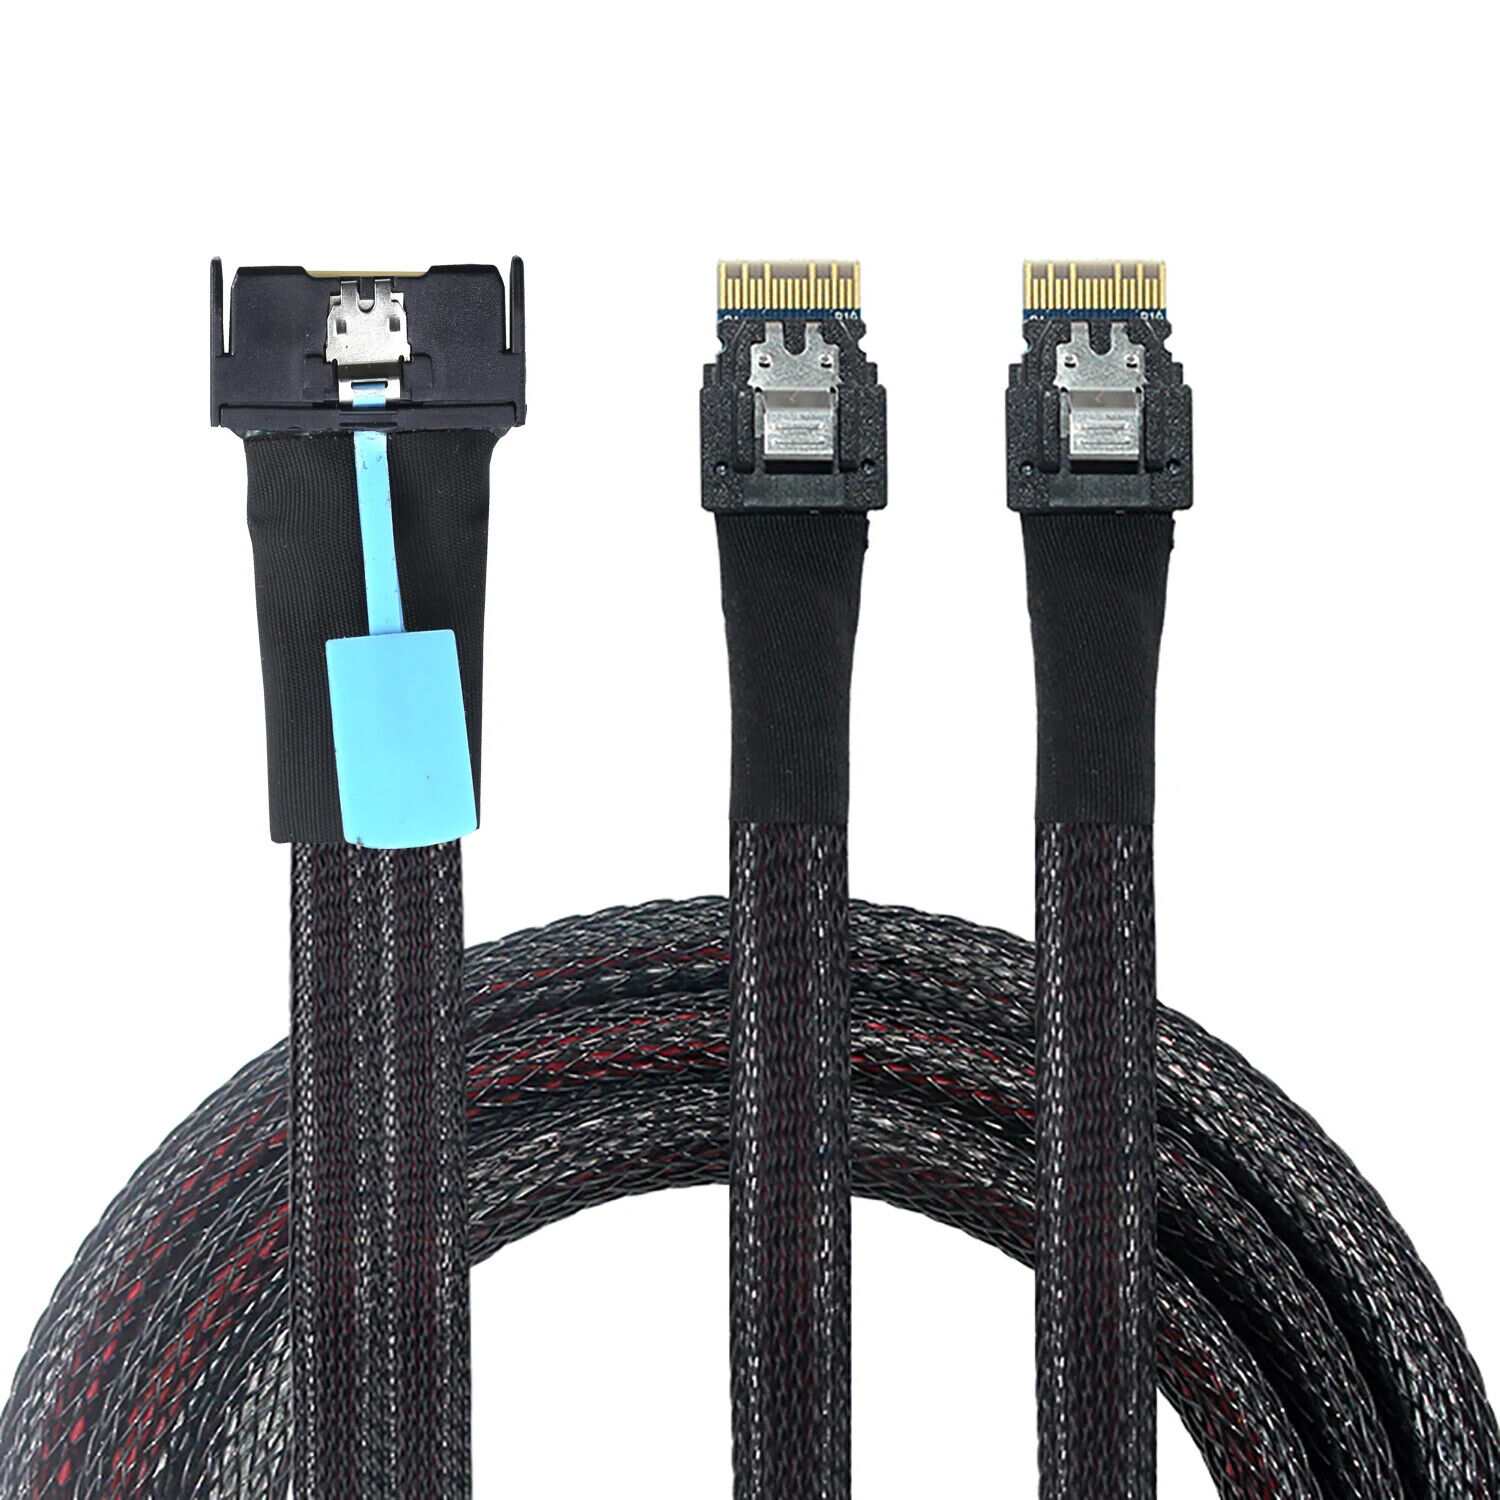 PCIE Gen5.0 Slimline SAS MCIO 8X 74P to dual 2XSFF-8654 4i server Adapter cables